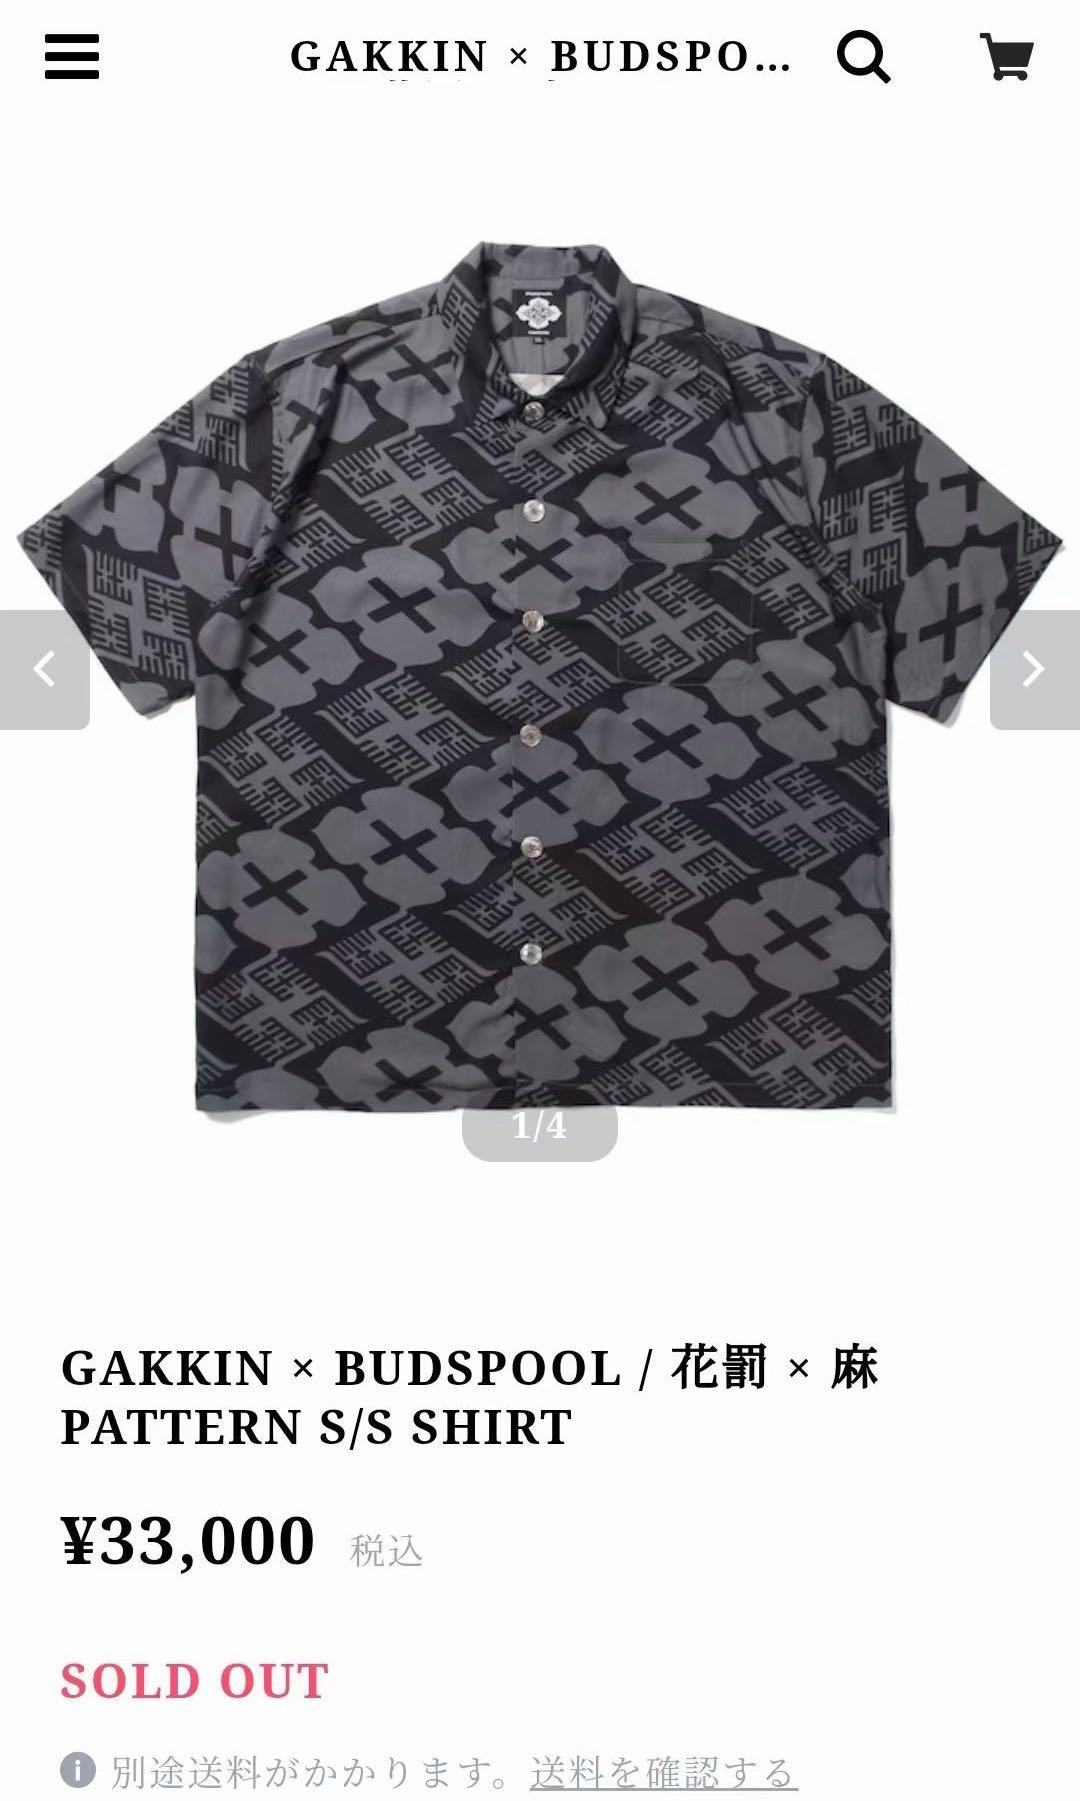 BUDSPOOL x GAKKIN 花罰×麻 PATTERN S/S SHIRT - シャツ